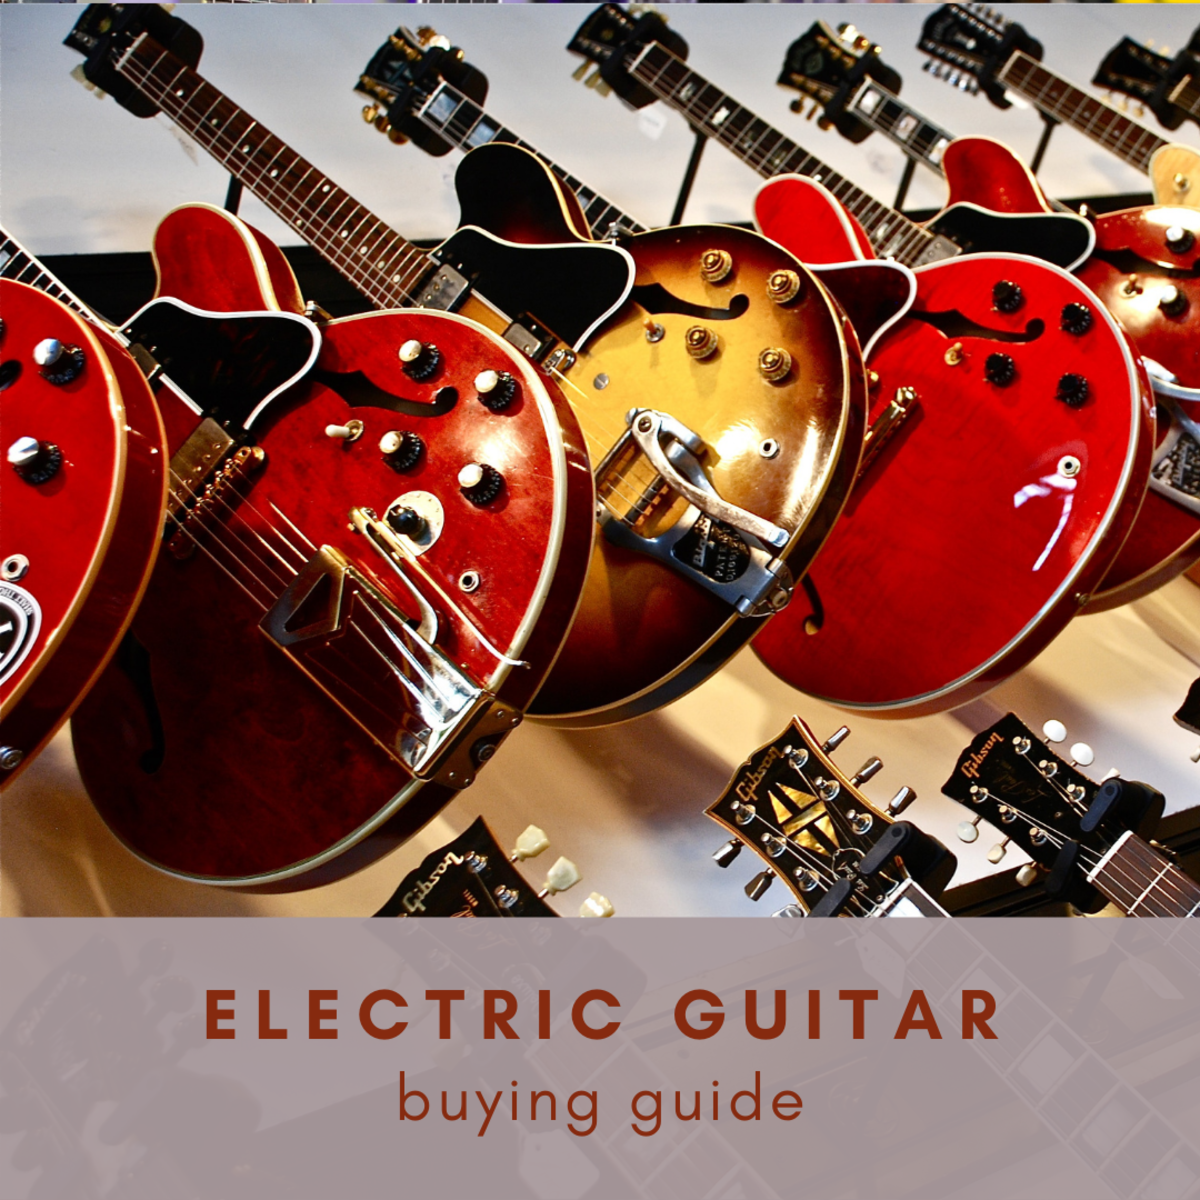 Advice on choosing an electric guitar for a beginner.